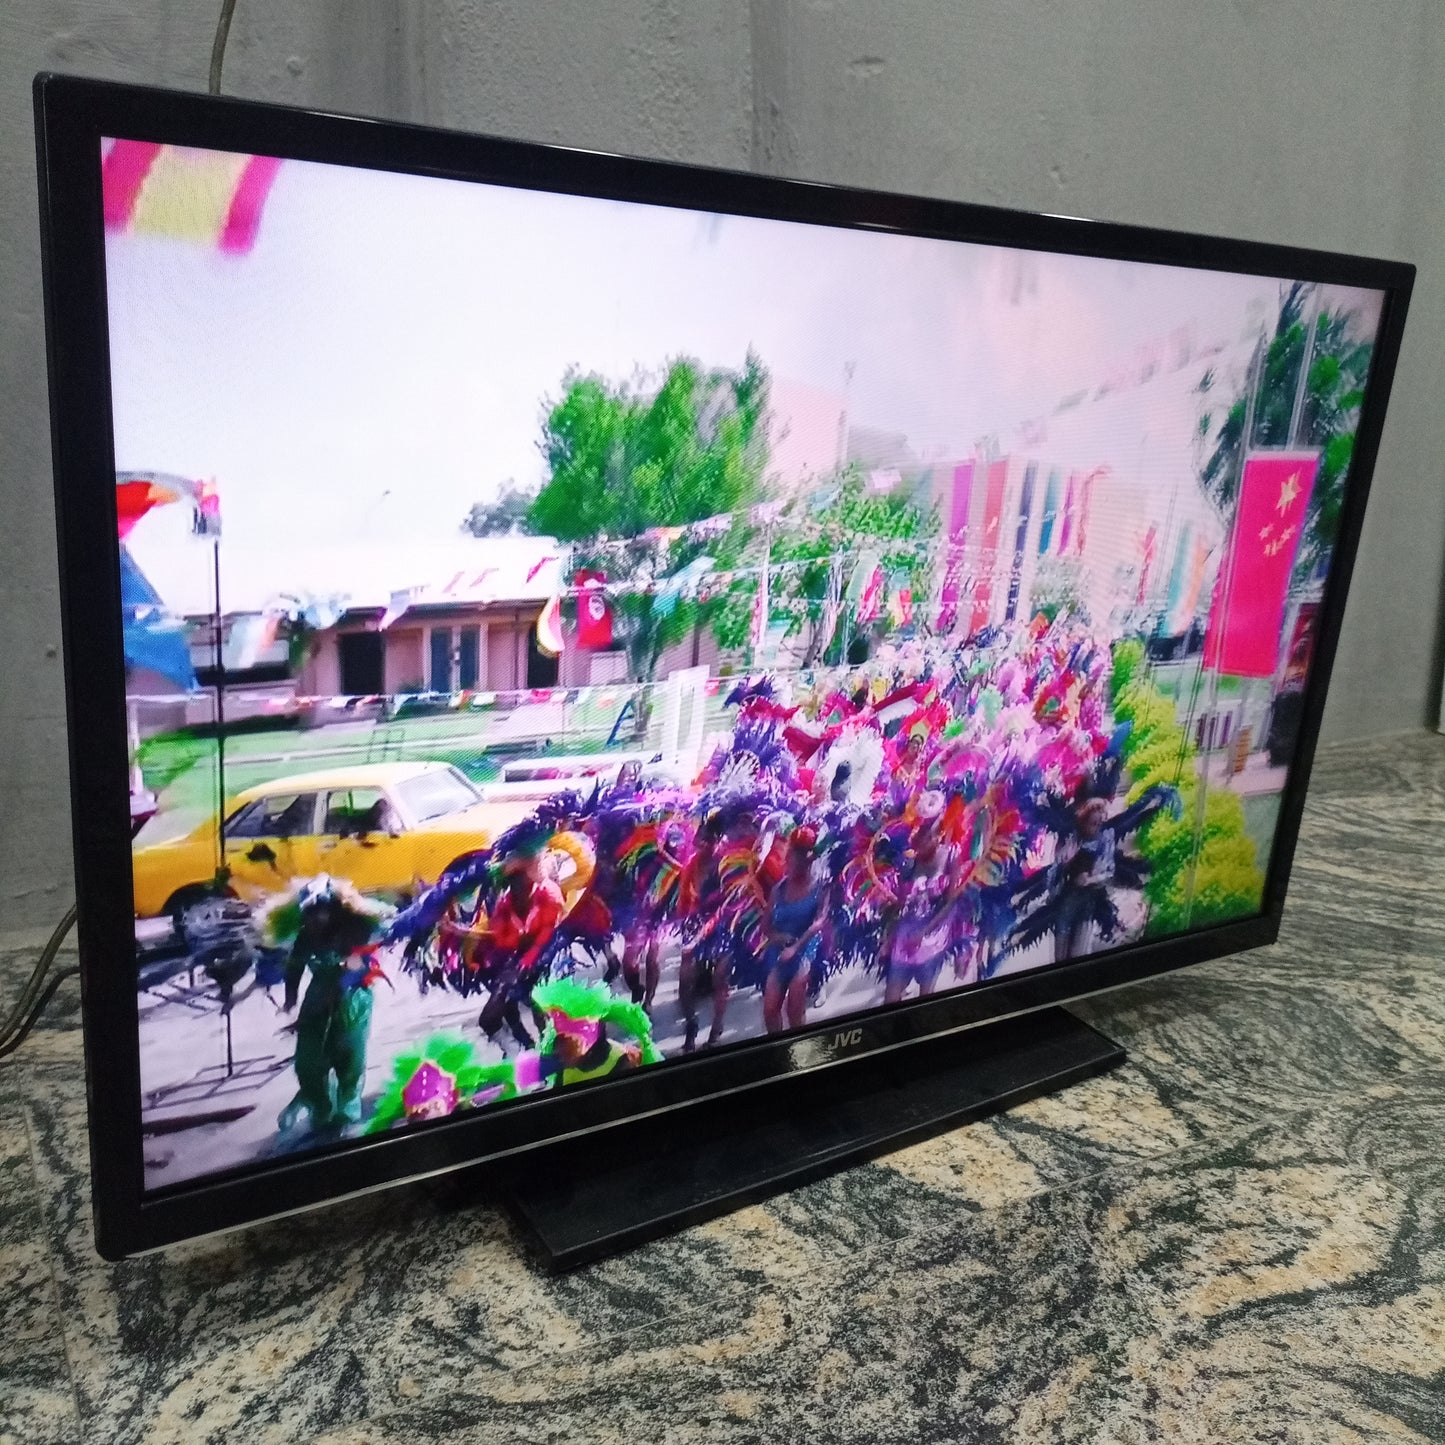 JVC 32 inch LT-32C690 Built-in WiFi Smart Full HD LED TV (Netflix, YouTube) - Foreign Used